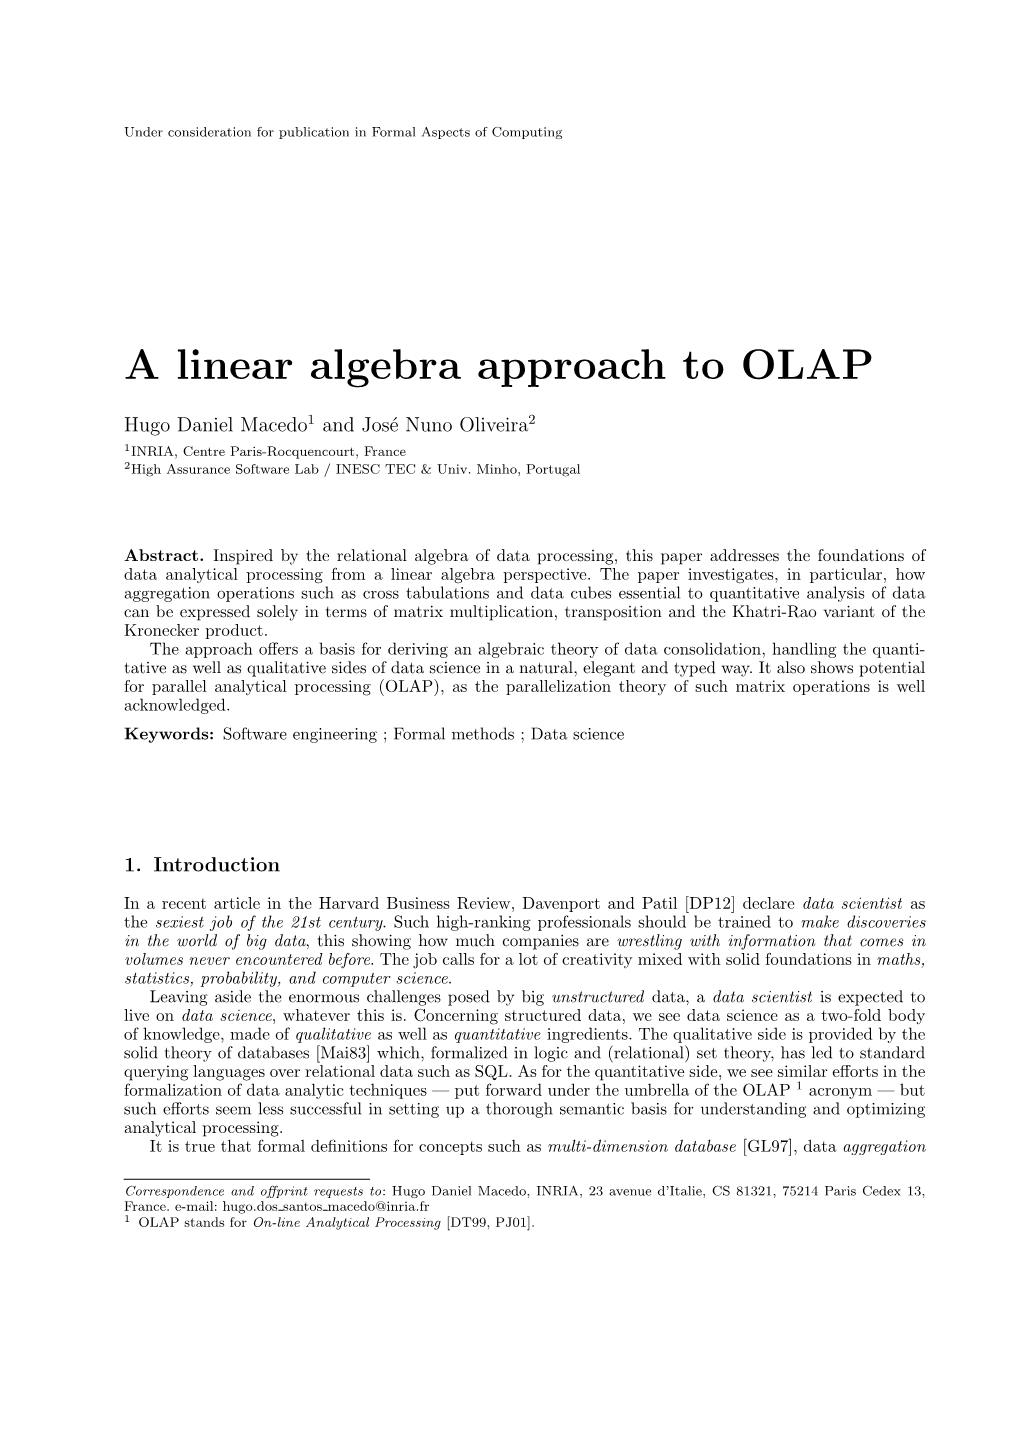 A Linear Algebra Approach to OLAP